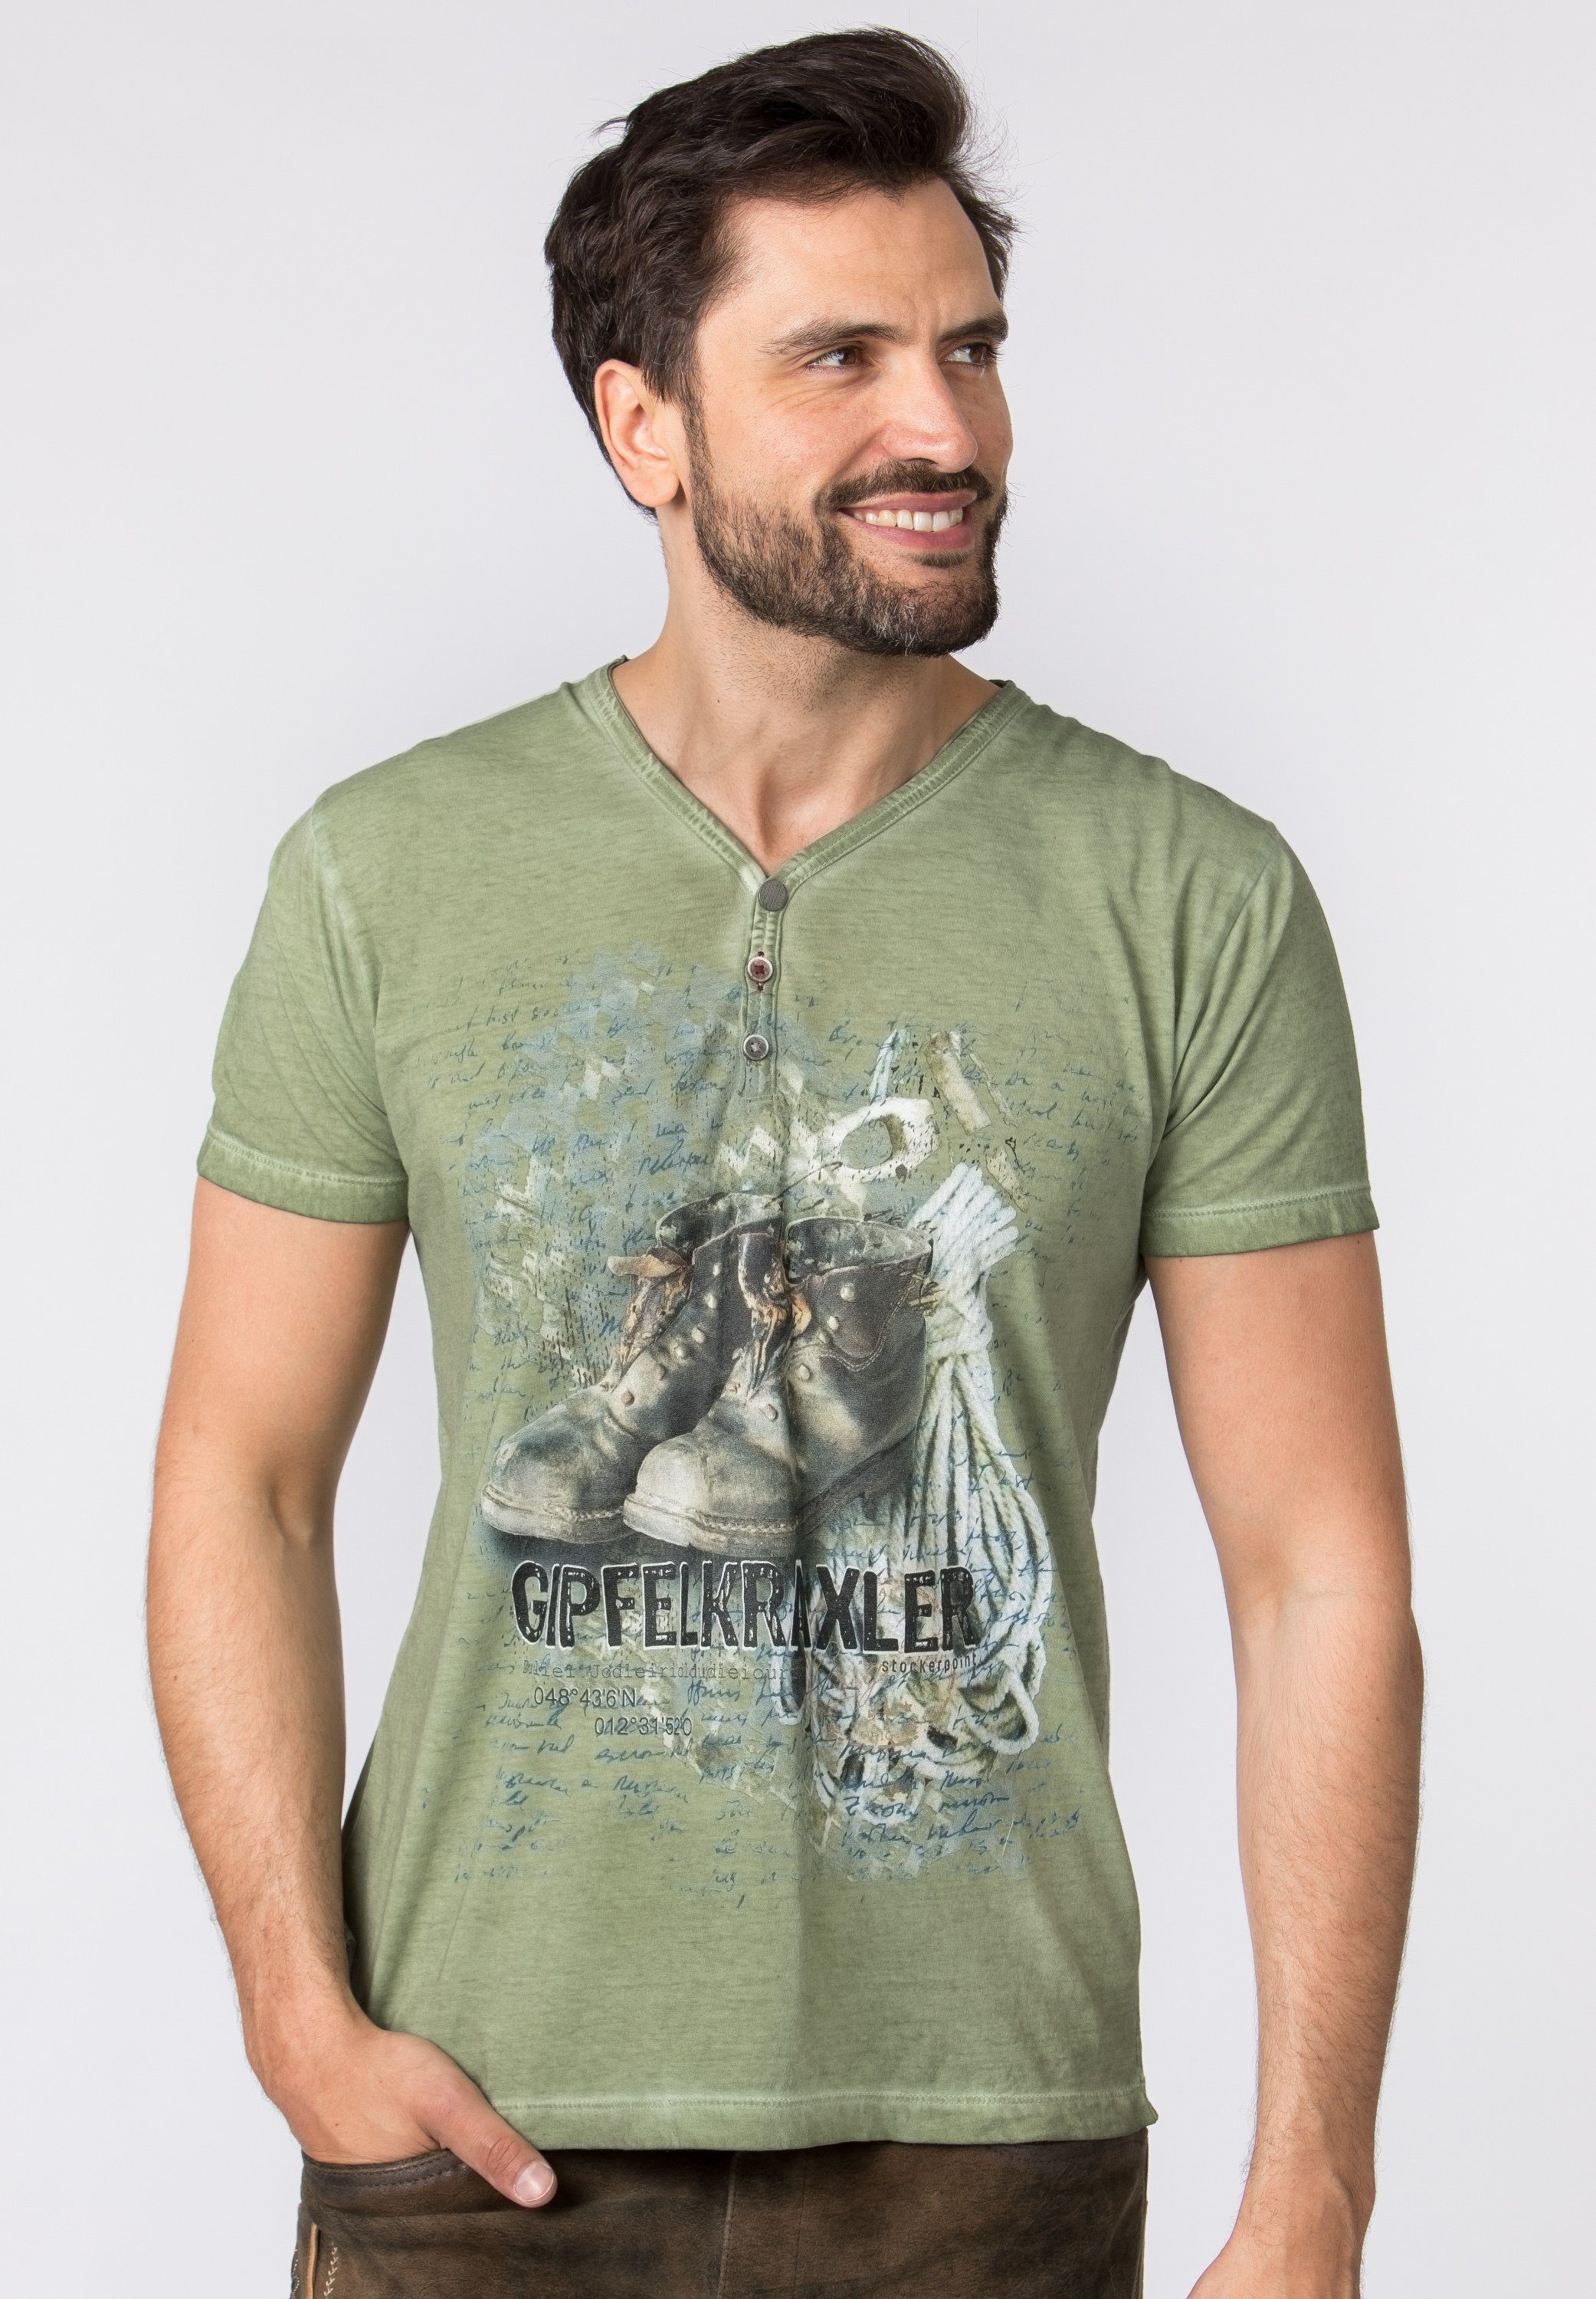 T-Shirt Stockerpoint Gipfelkraxler grün